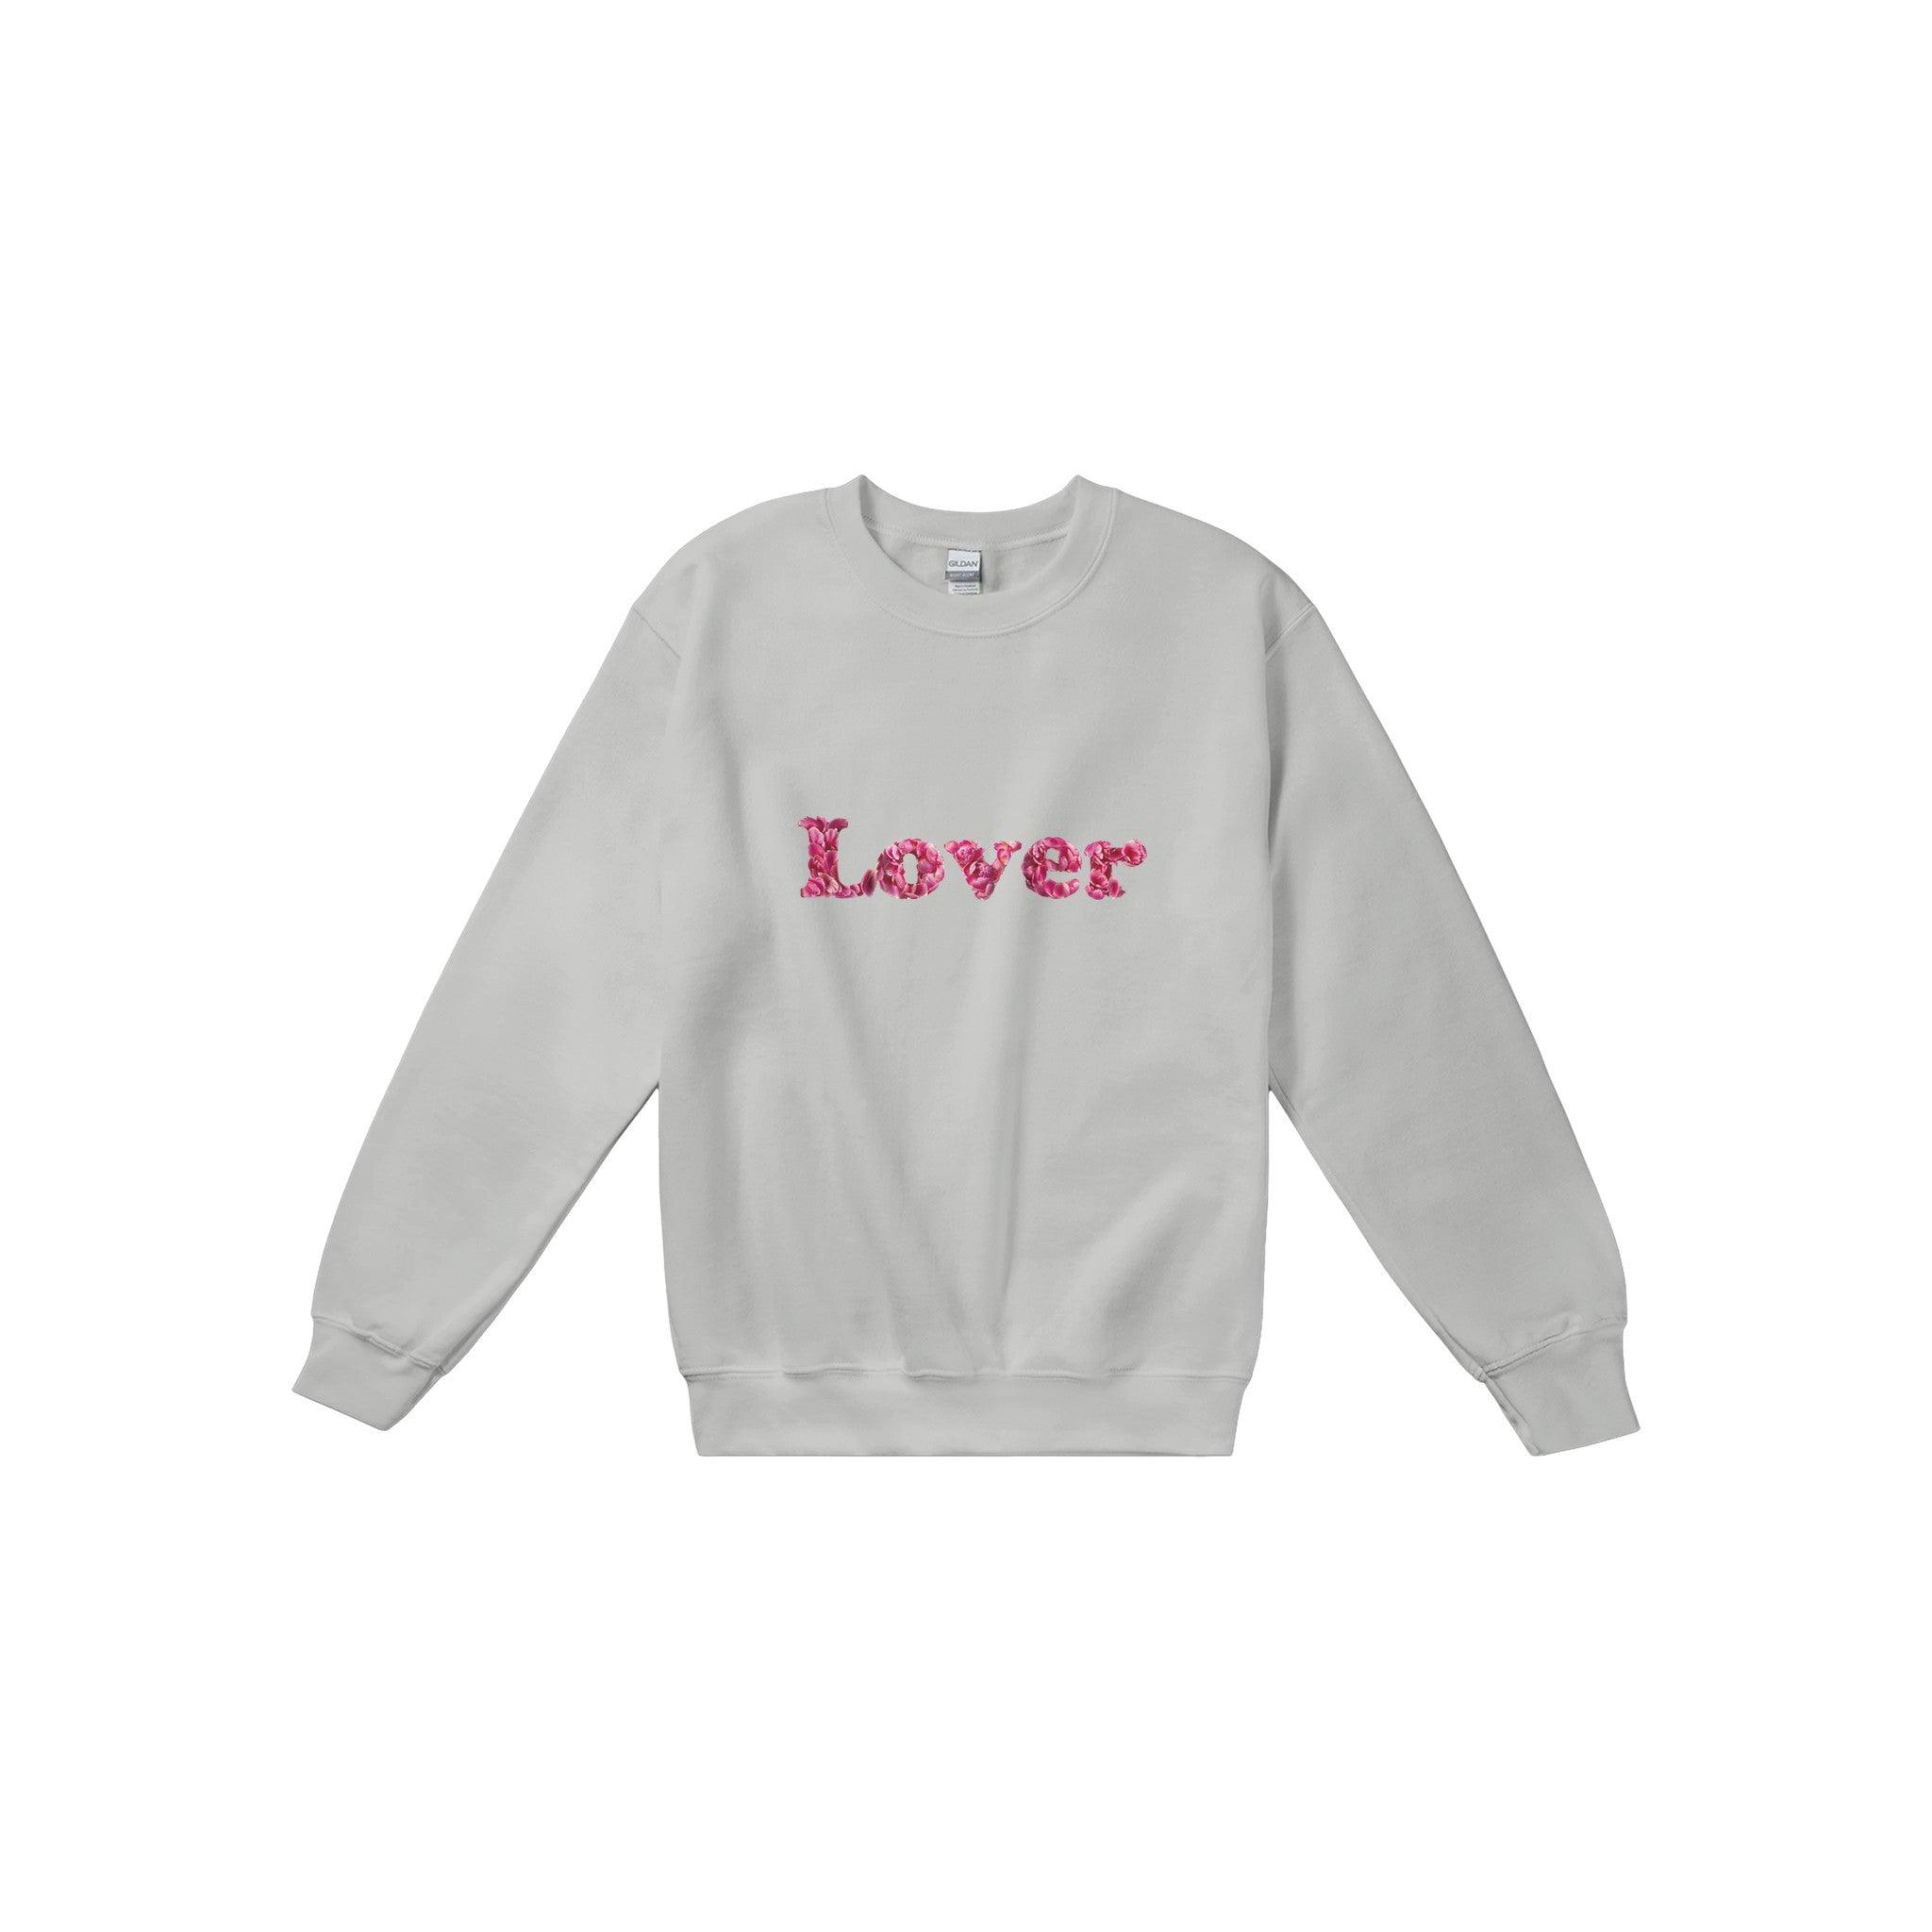 'Lover' Boyfriend Sweatshirt - POMA